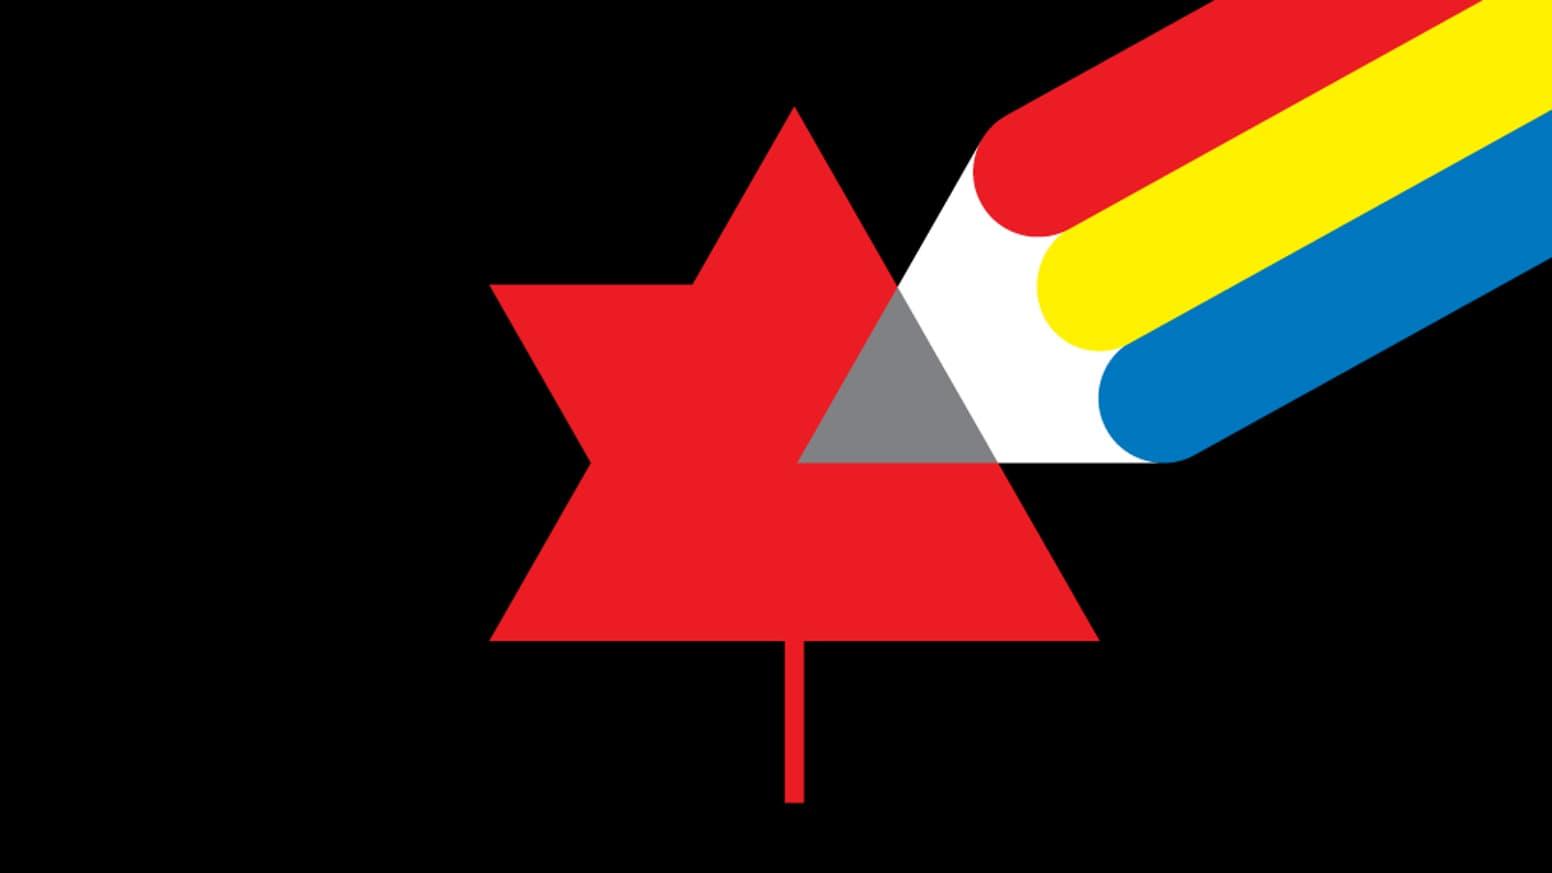 Design Canada backdrop